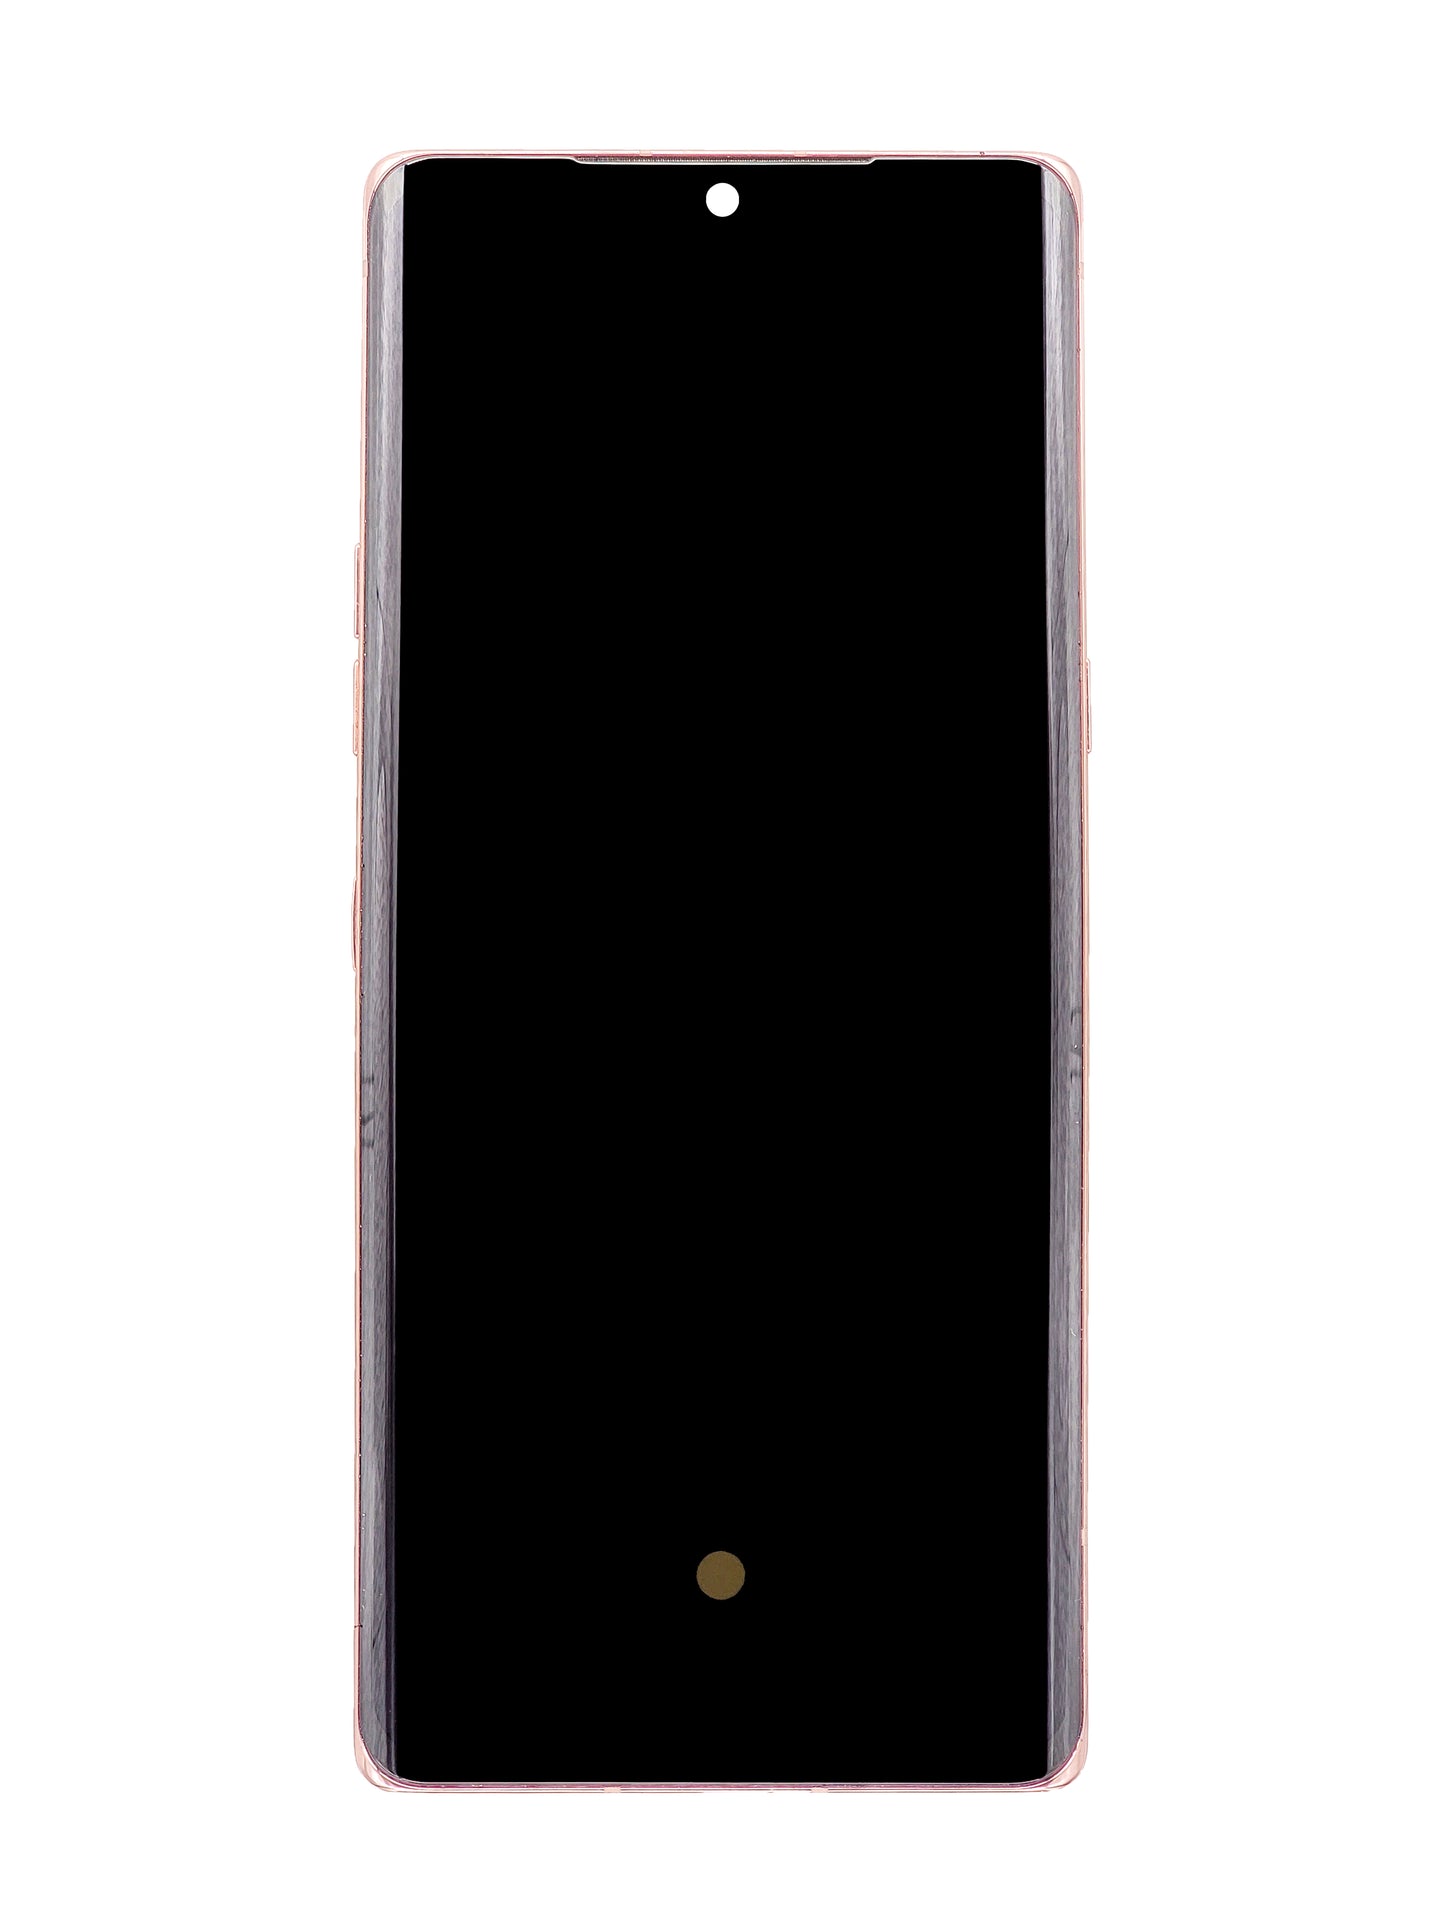 LGV Velvet 5G (Non-Verizon Version) Screen Assembly (With The Frame) (Refurbished) (Pink)